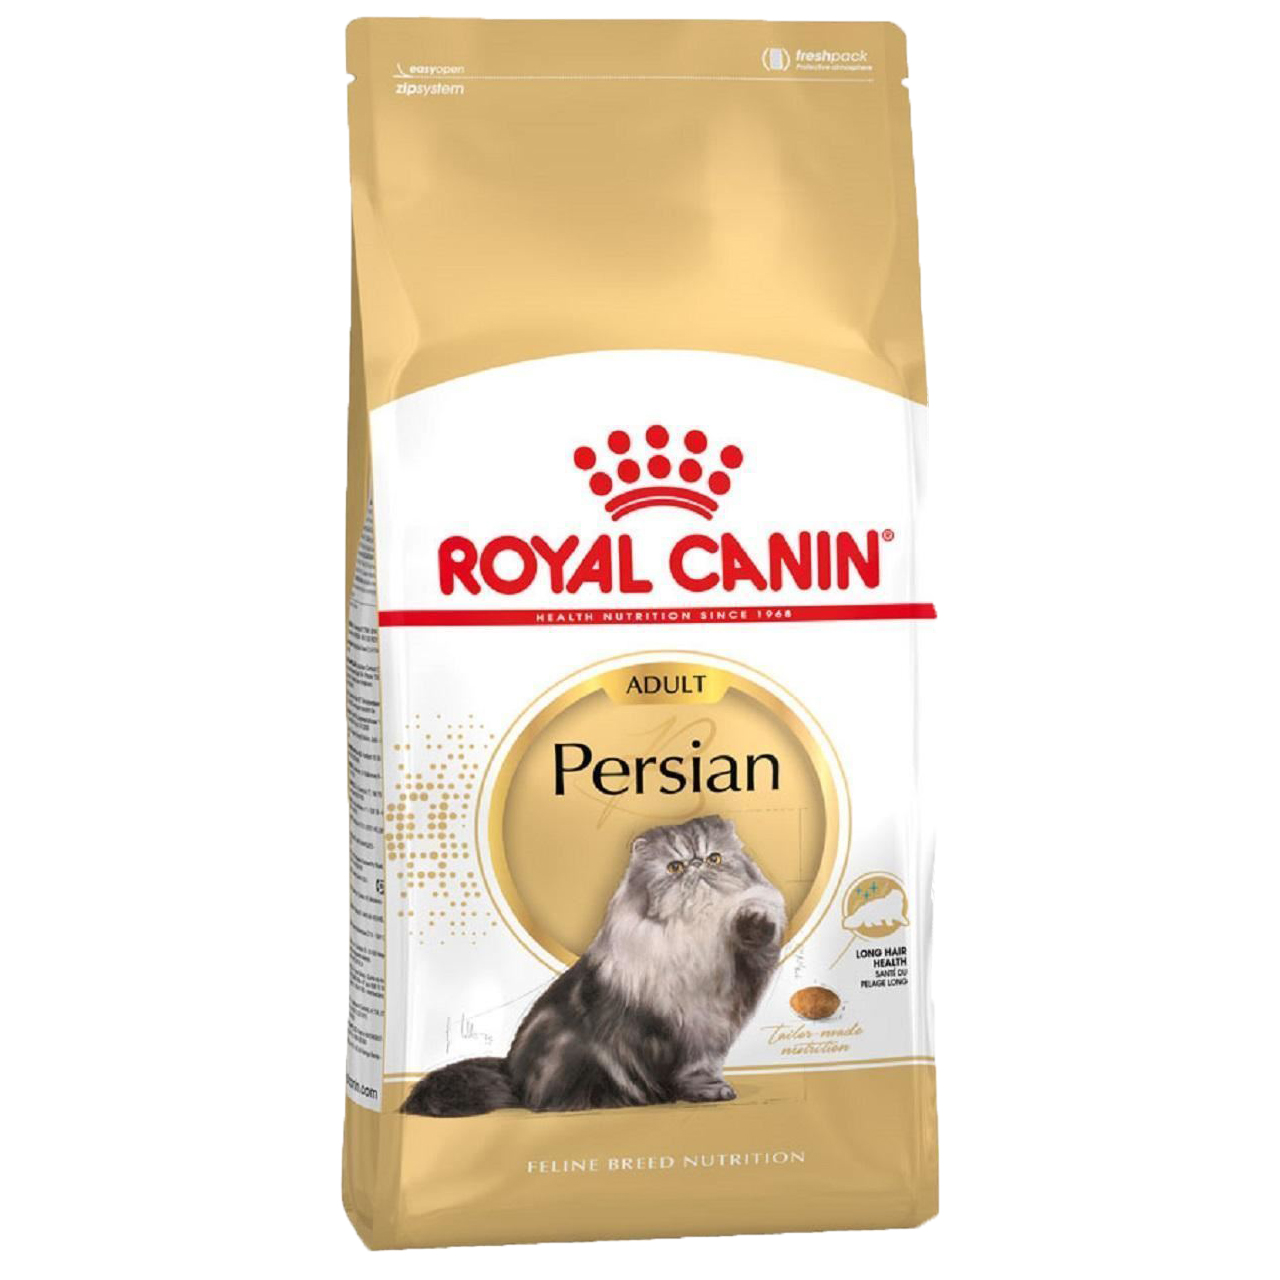 Royal Canin Adult Persian 400gm